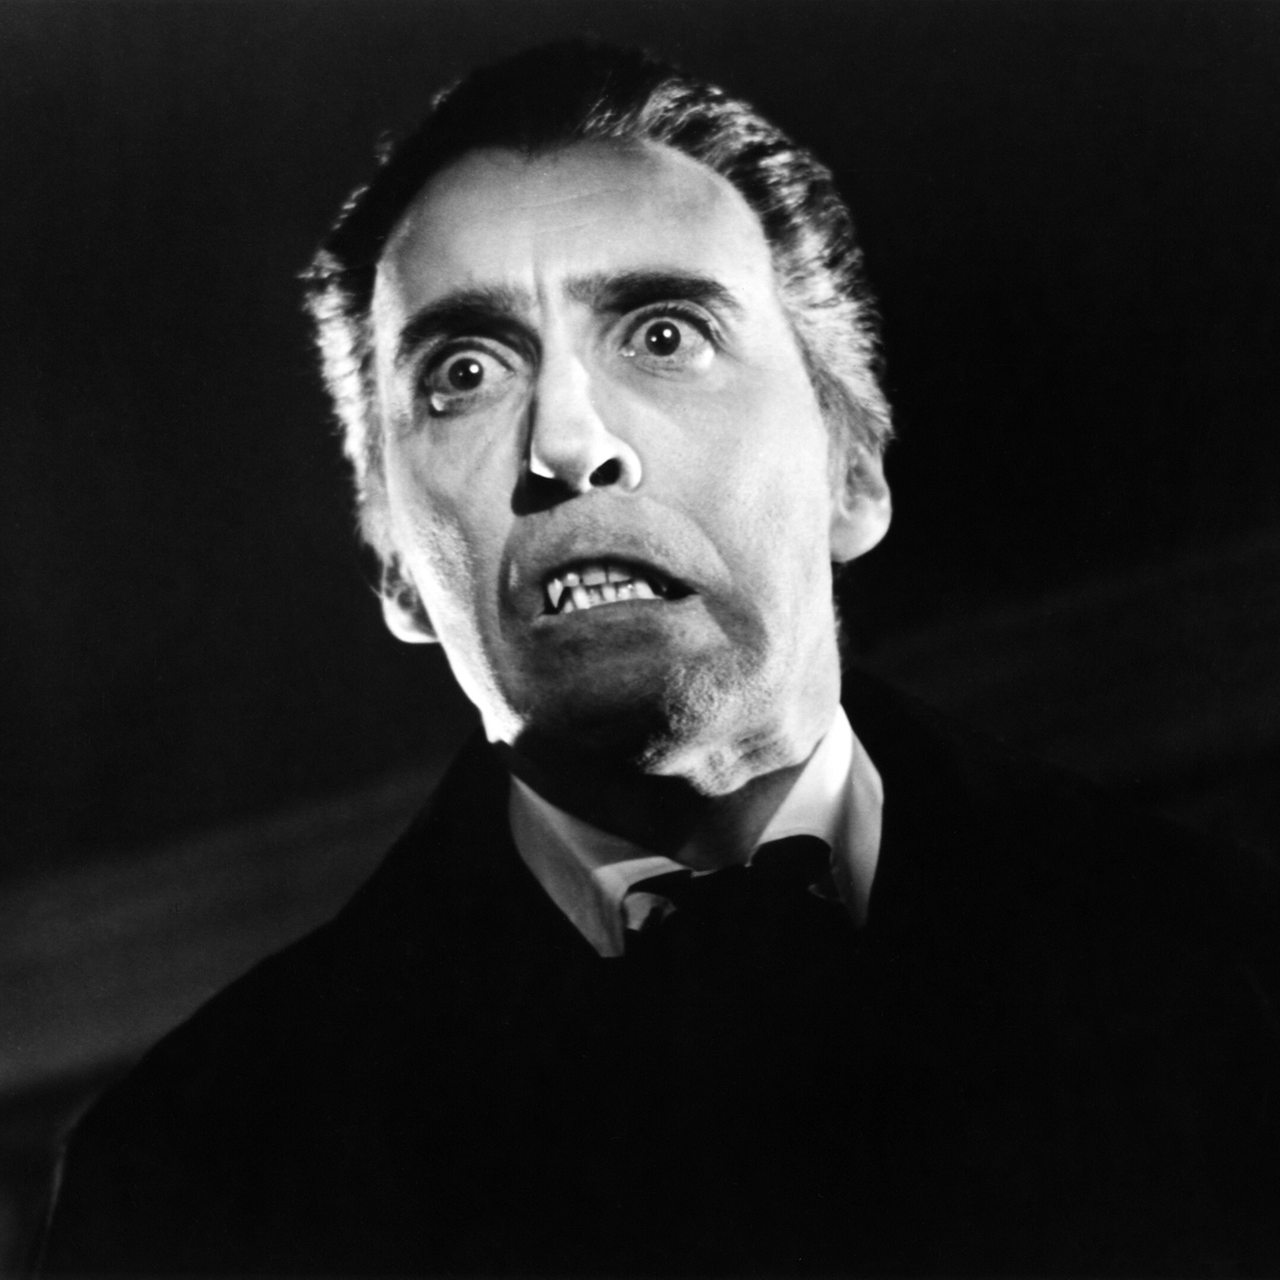 hristopher Lee, 1966, als Dracula